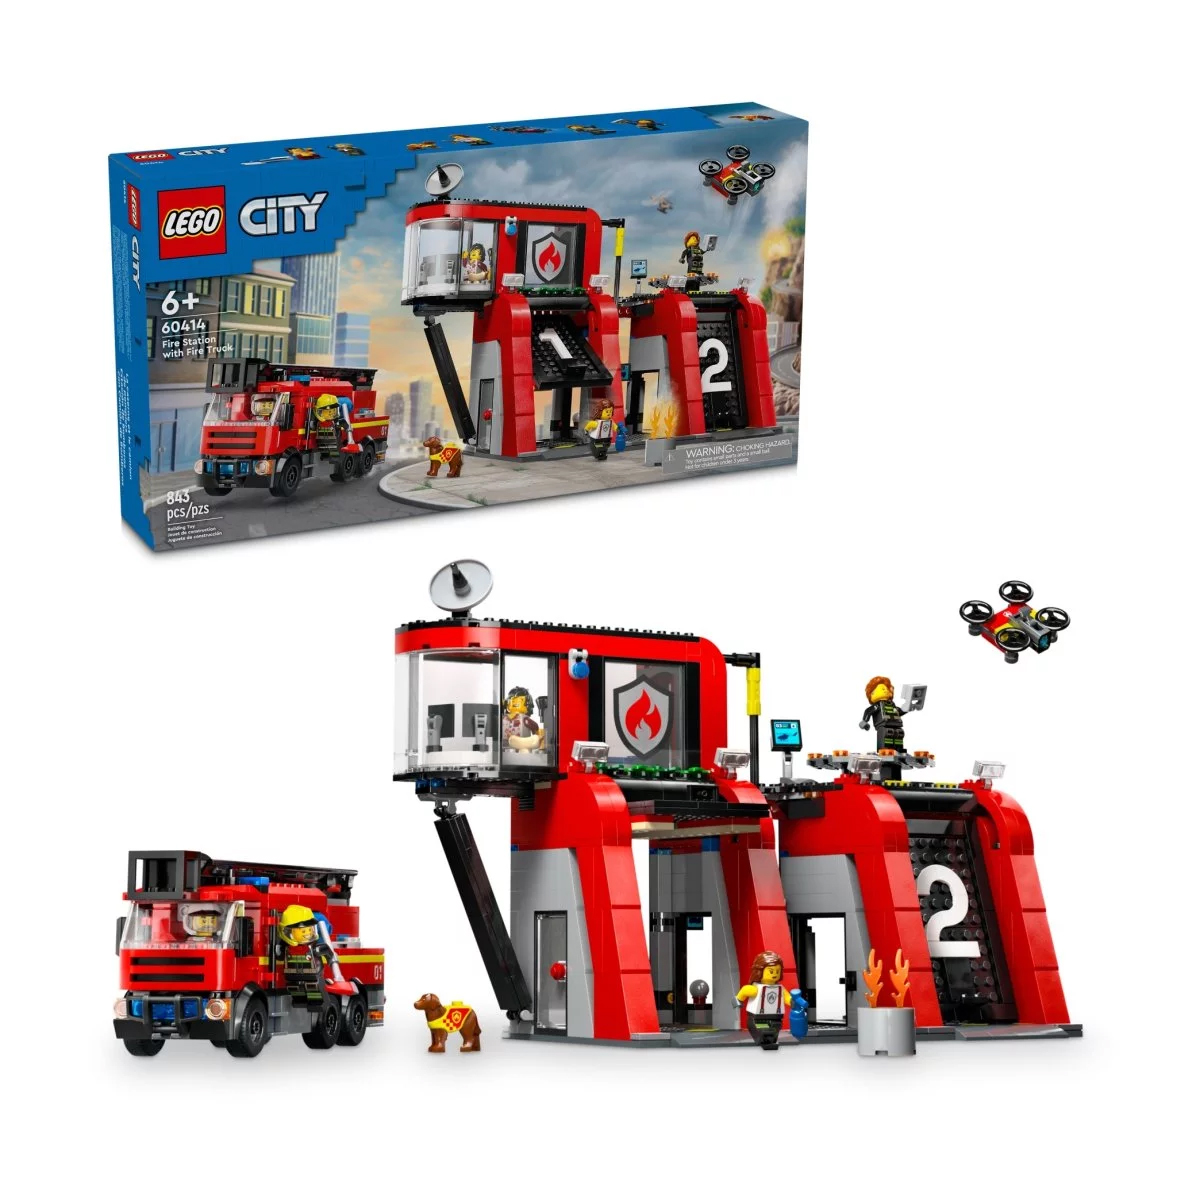 Конструктор Lego City Fire Station with Fire Truck 60414, 843 детали конструктор cobi engine 13 fire station